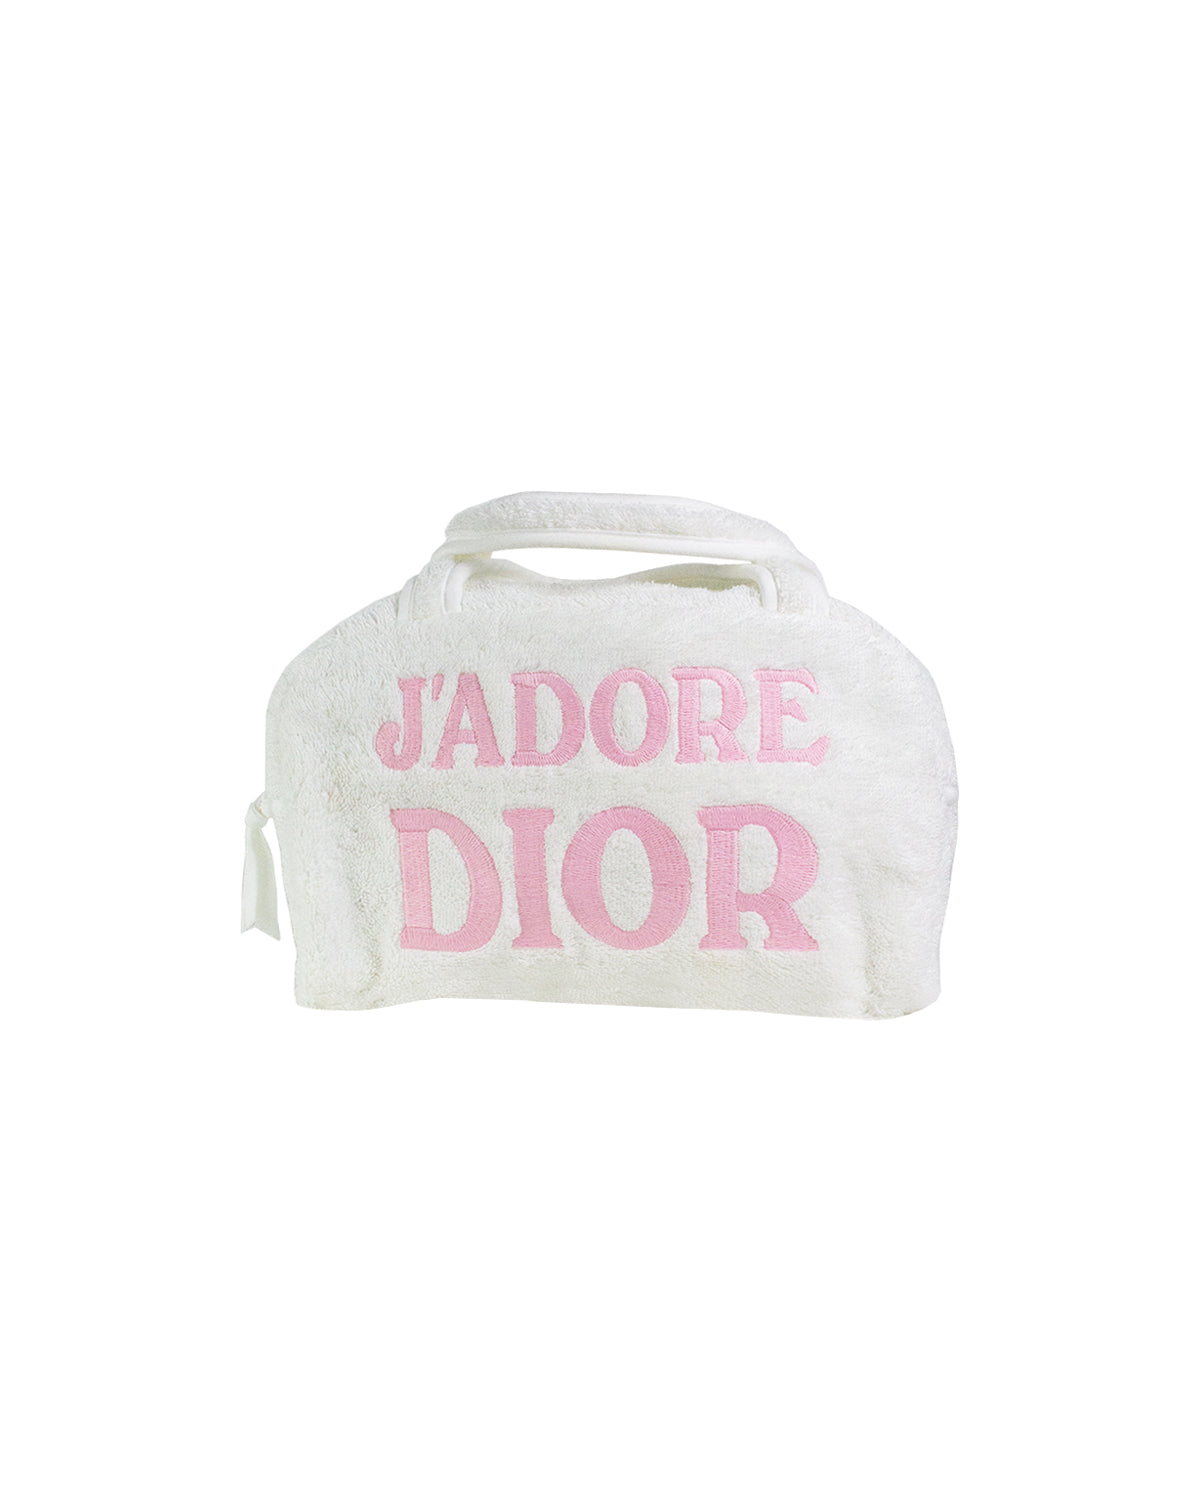 Dior, Bags, Christian Dior Jadore Dior Terry Cloth Handbag Vintage Euc  Msrp 85